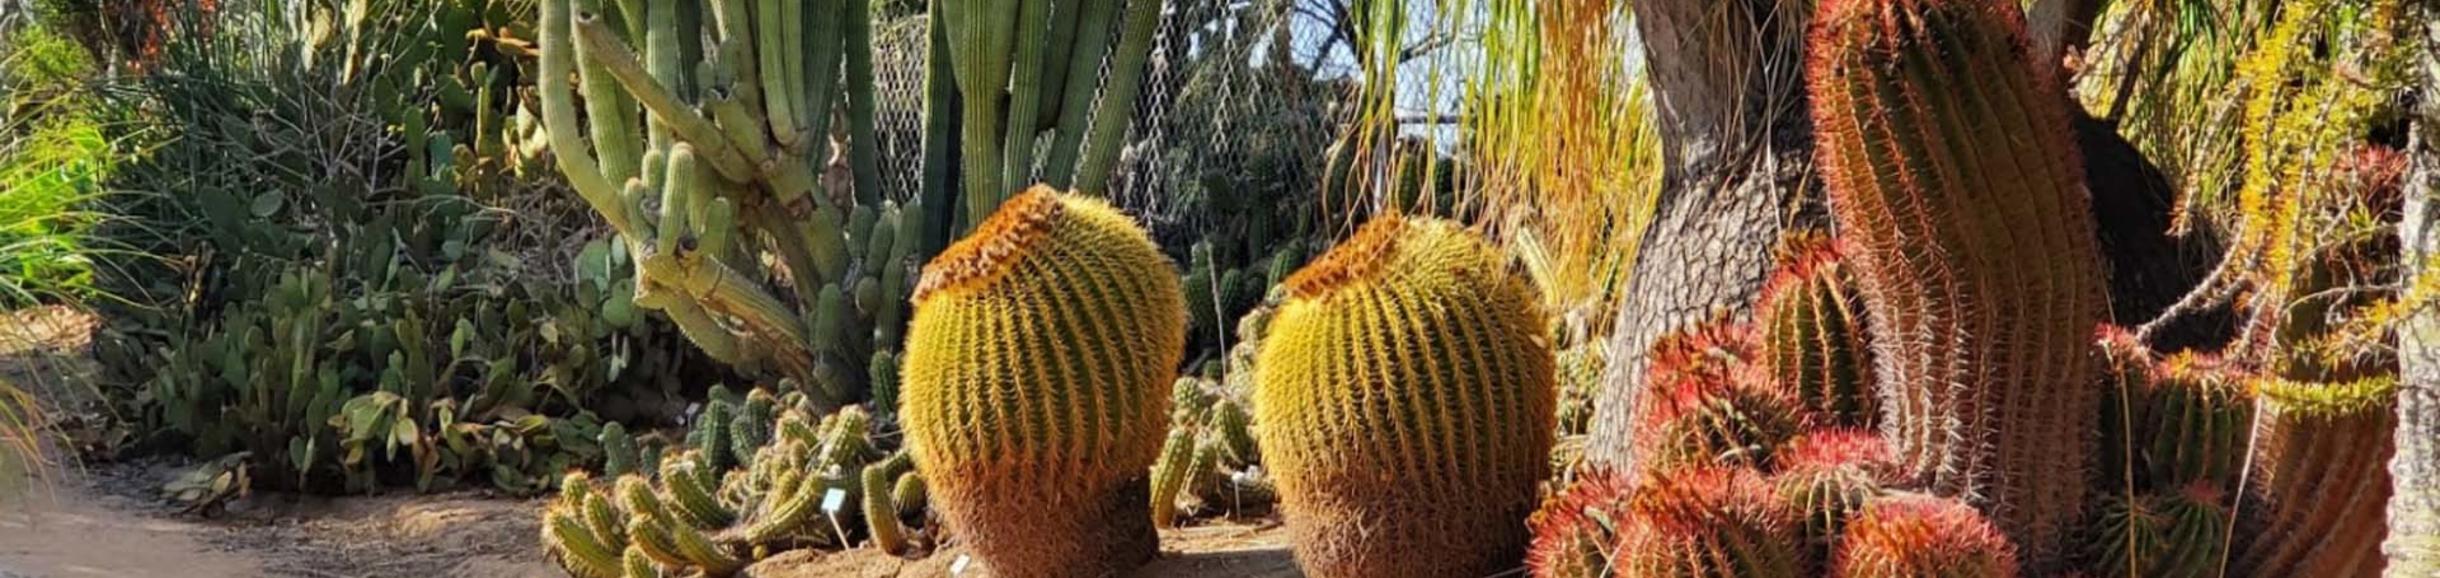 Cacti in the Botanic Gardens